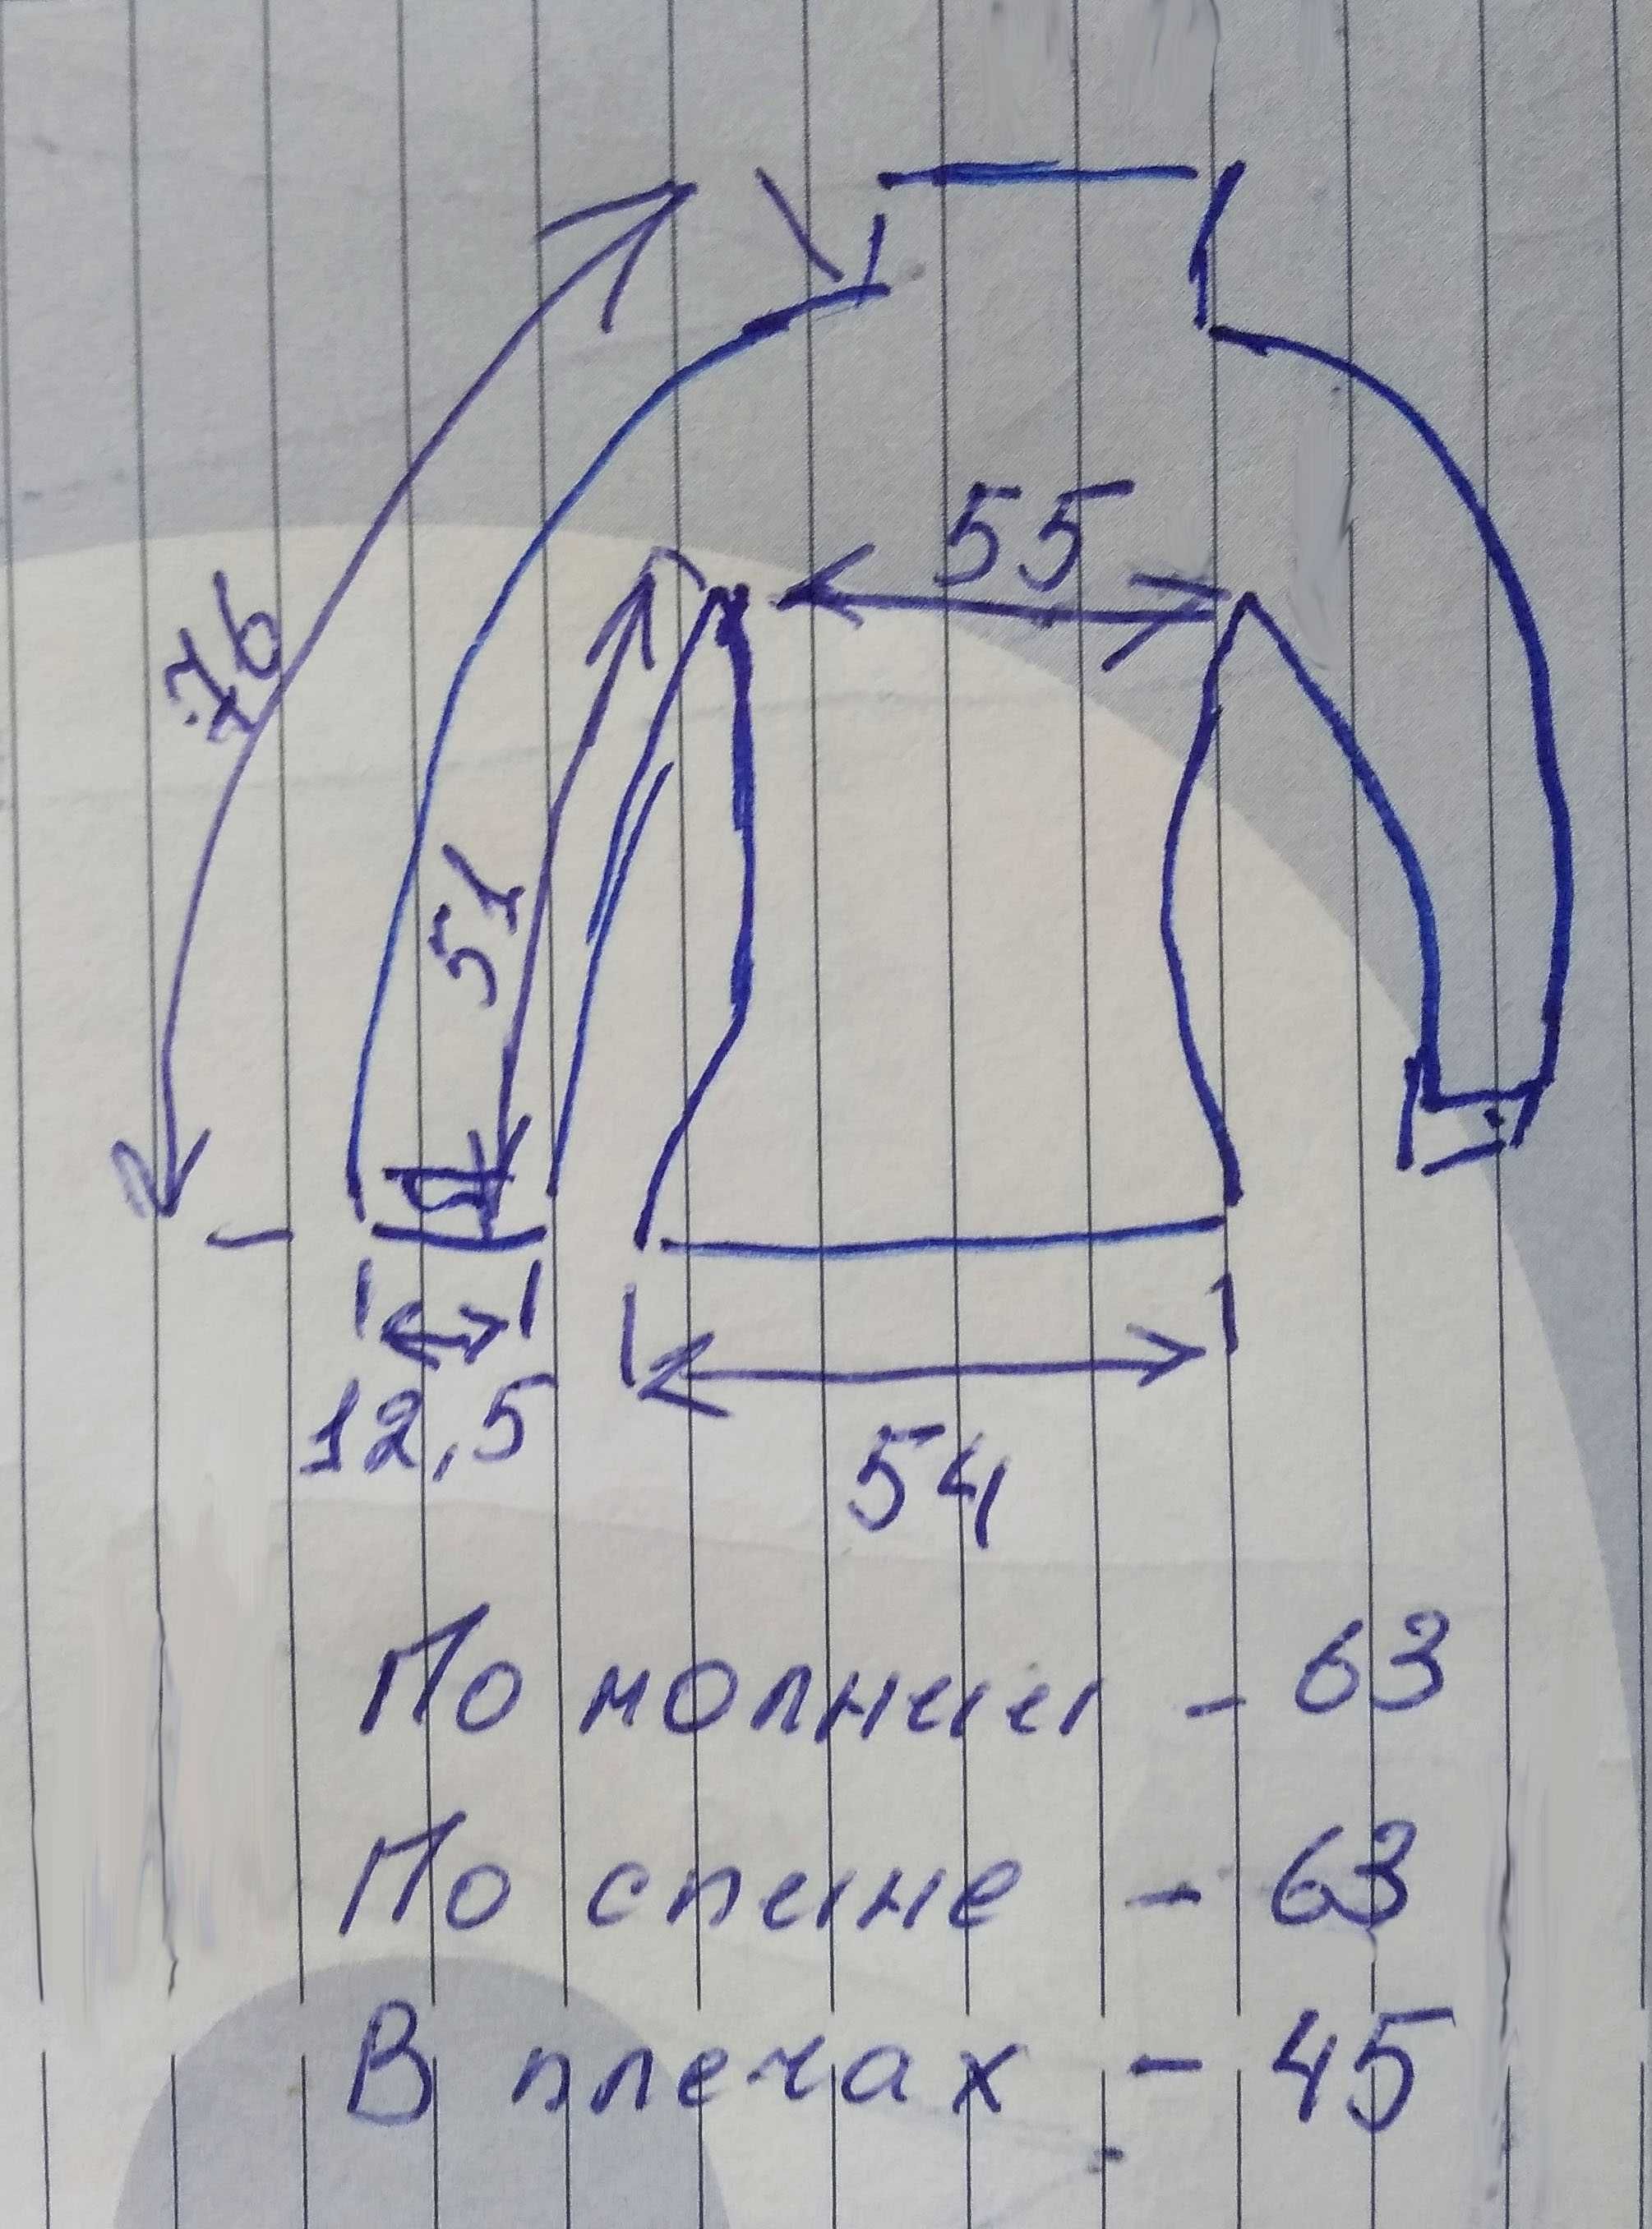 Спортивная кофта Nike (made in Turkey), женск, плечи 45 см. Возм обмен